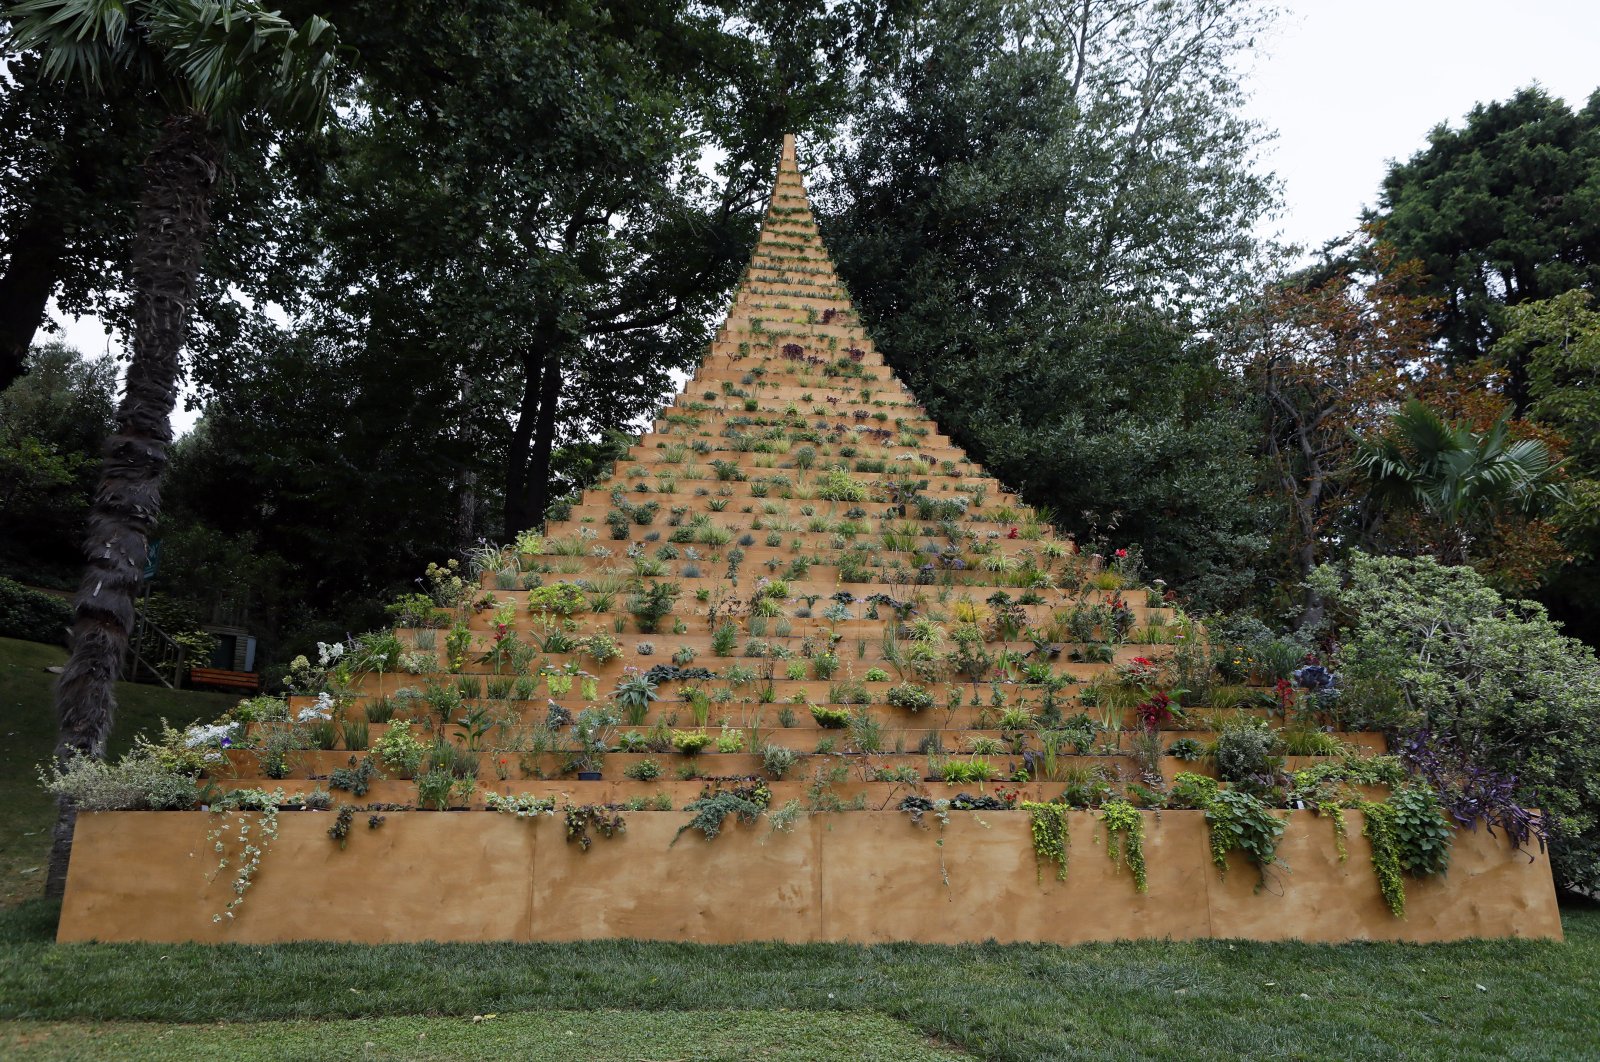 ‘Living Pyramid’ seniman ekofeminis Agnes Denes merevitalisasi flora Istanbul